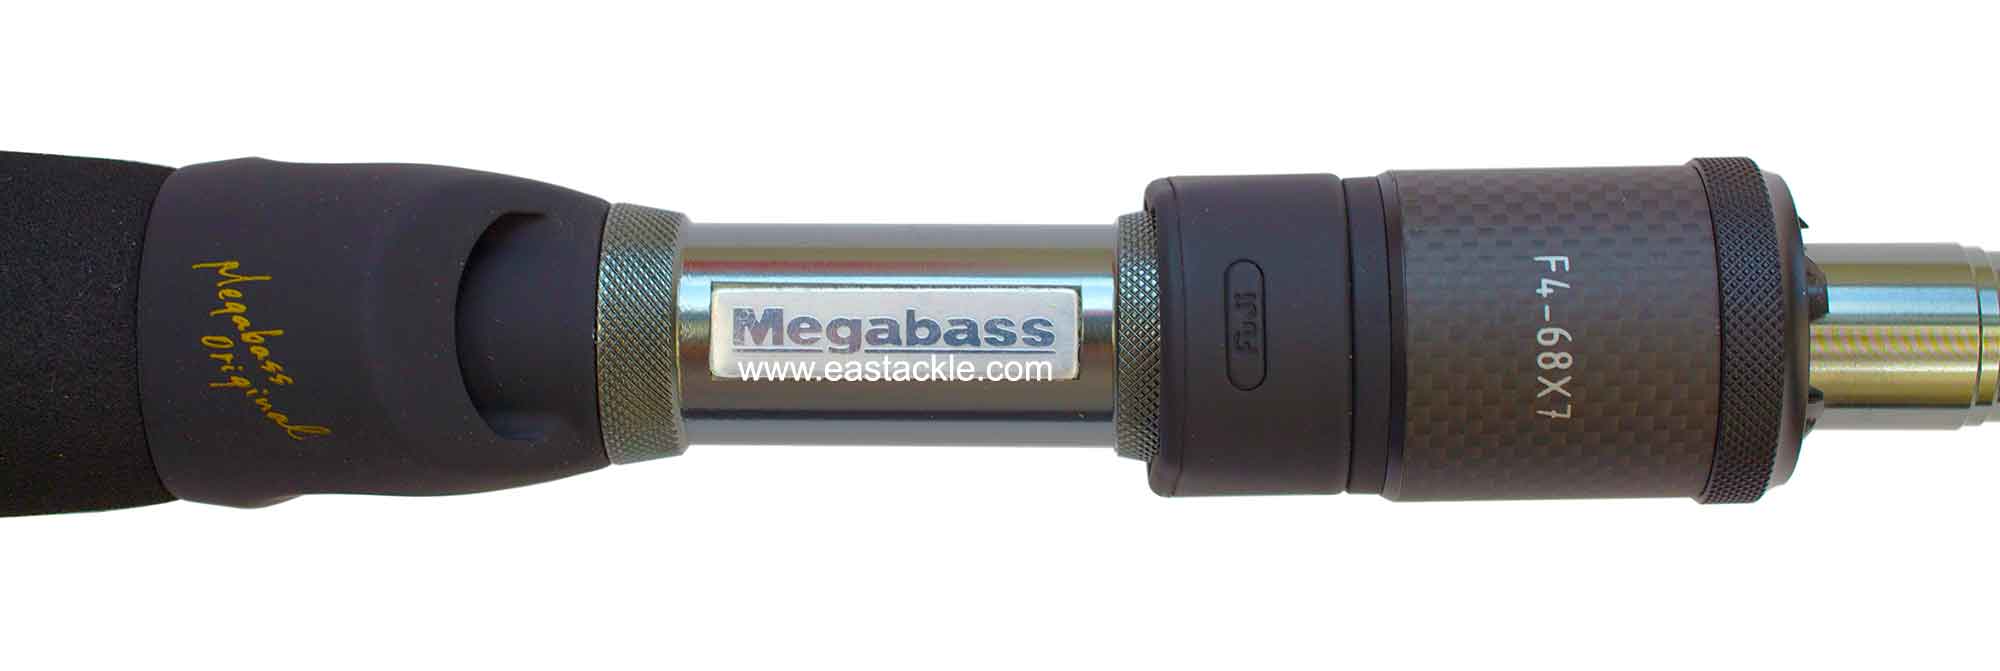 Megabass - Destroyer X7 - F4-68X7 - CYCLONE ADVANTAGE - Bait Casting Rod - Reel Seat (Top View)